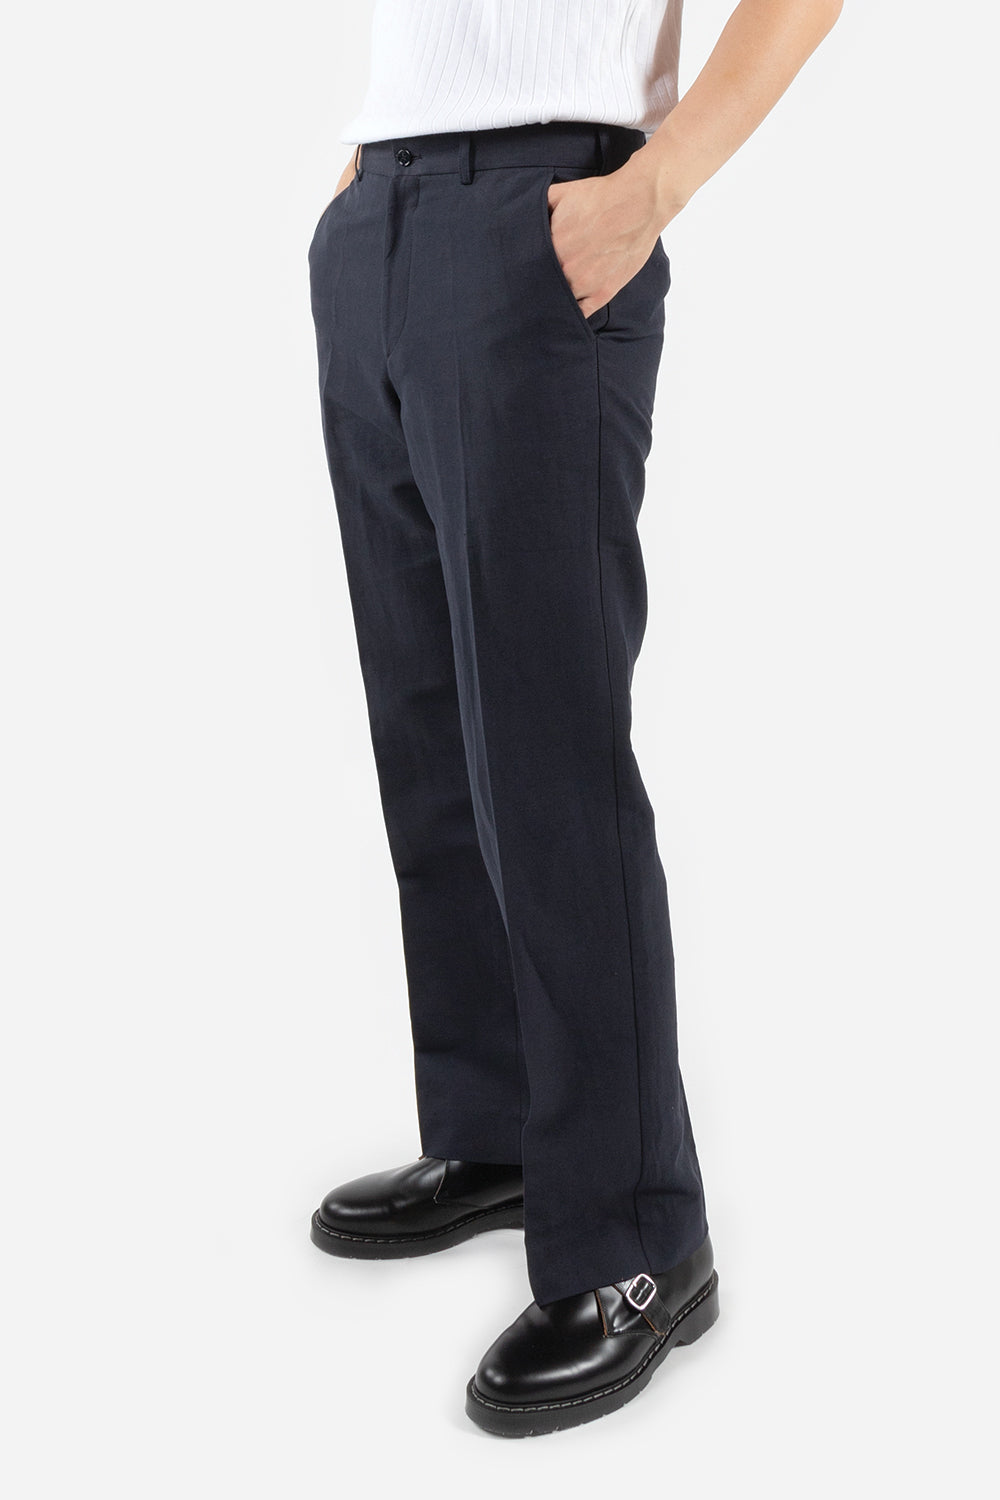 Schnaydermans-tailored-trousers-cotton-linen-wide-dark-navy